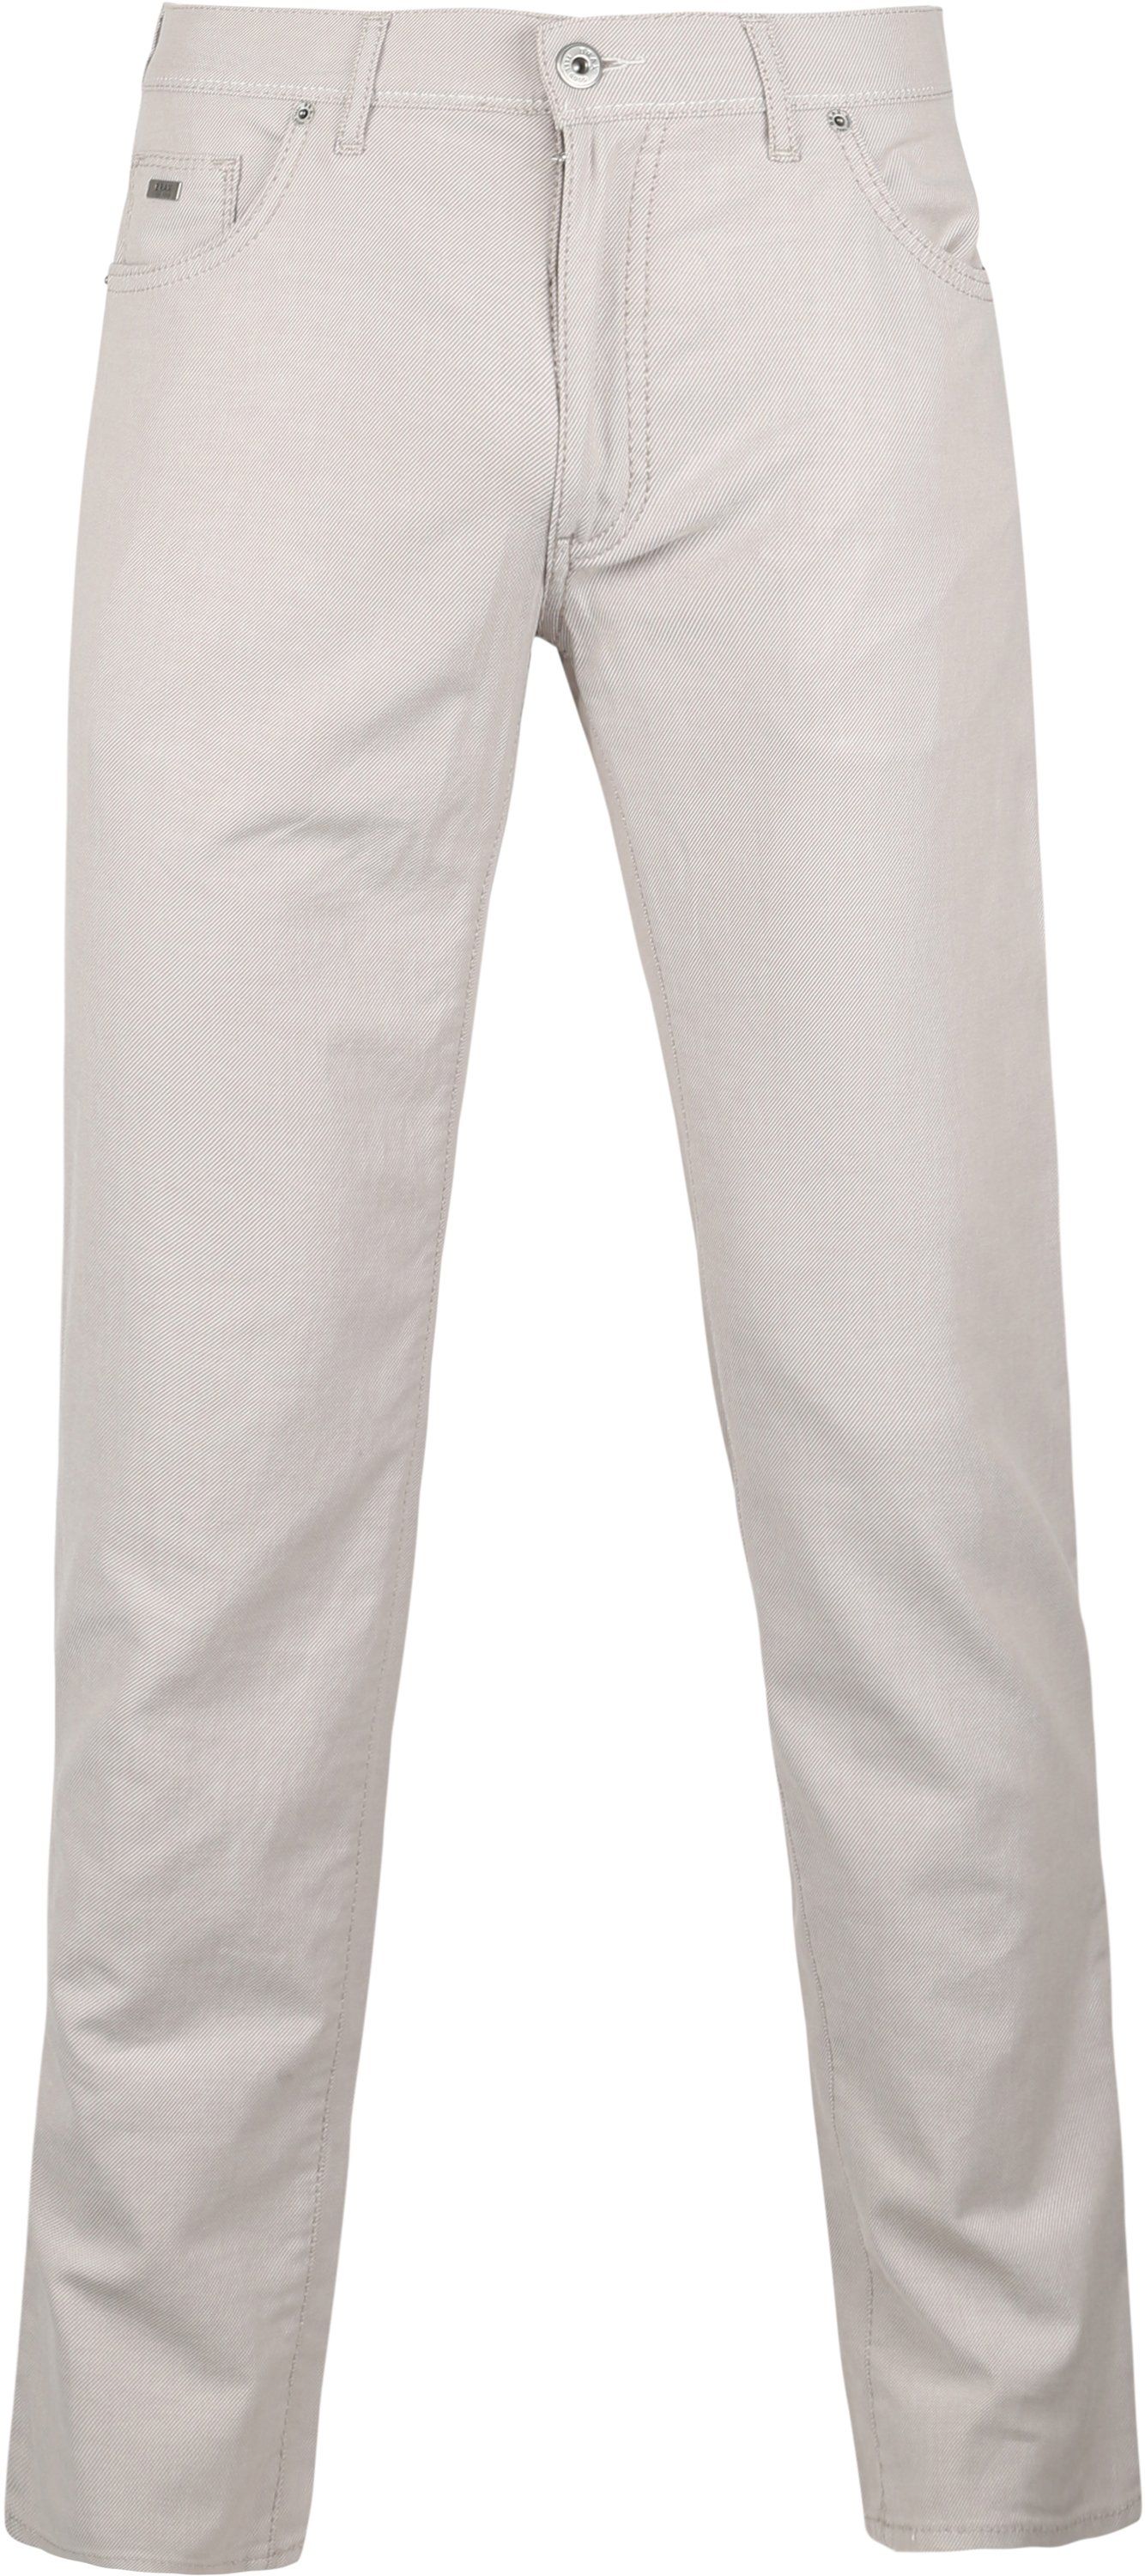 Brax Cadiz Pants Five Pocket Light Beige size W 33